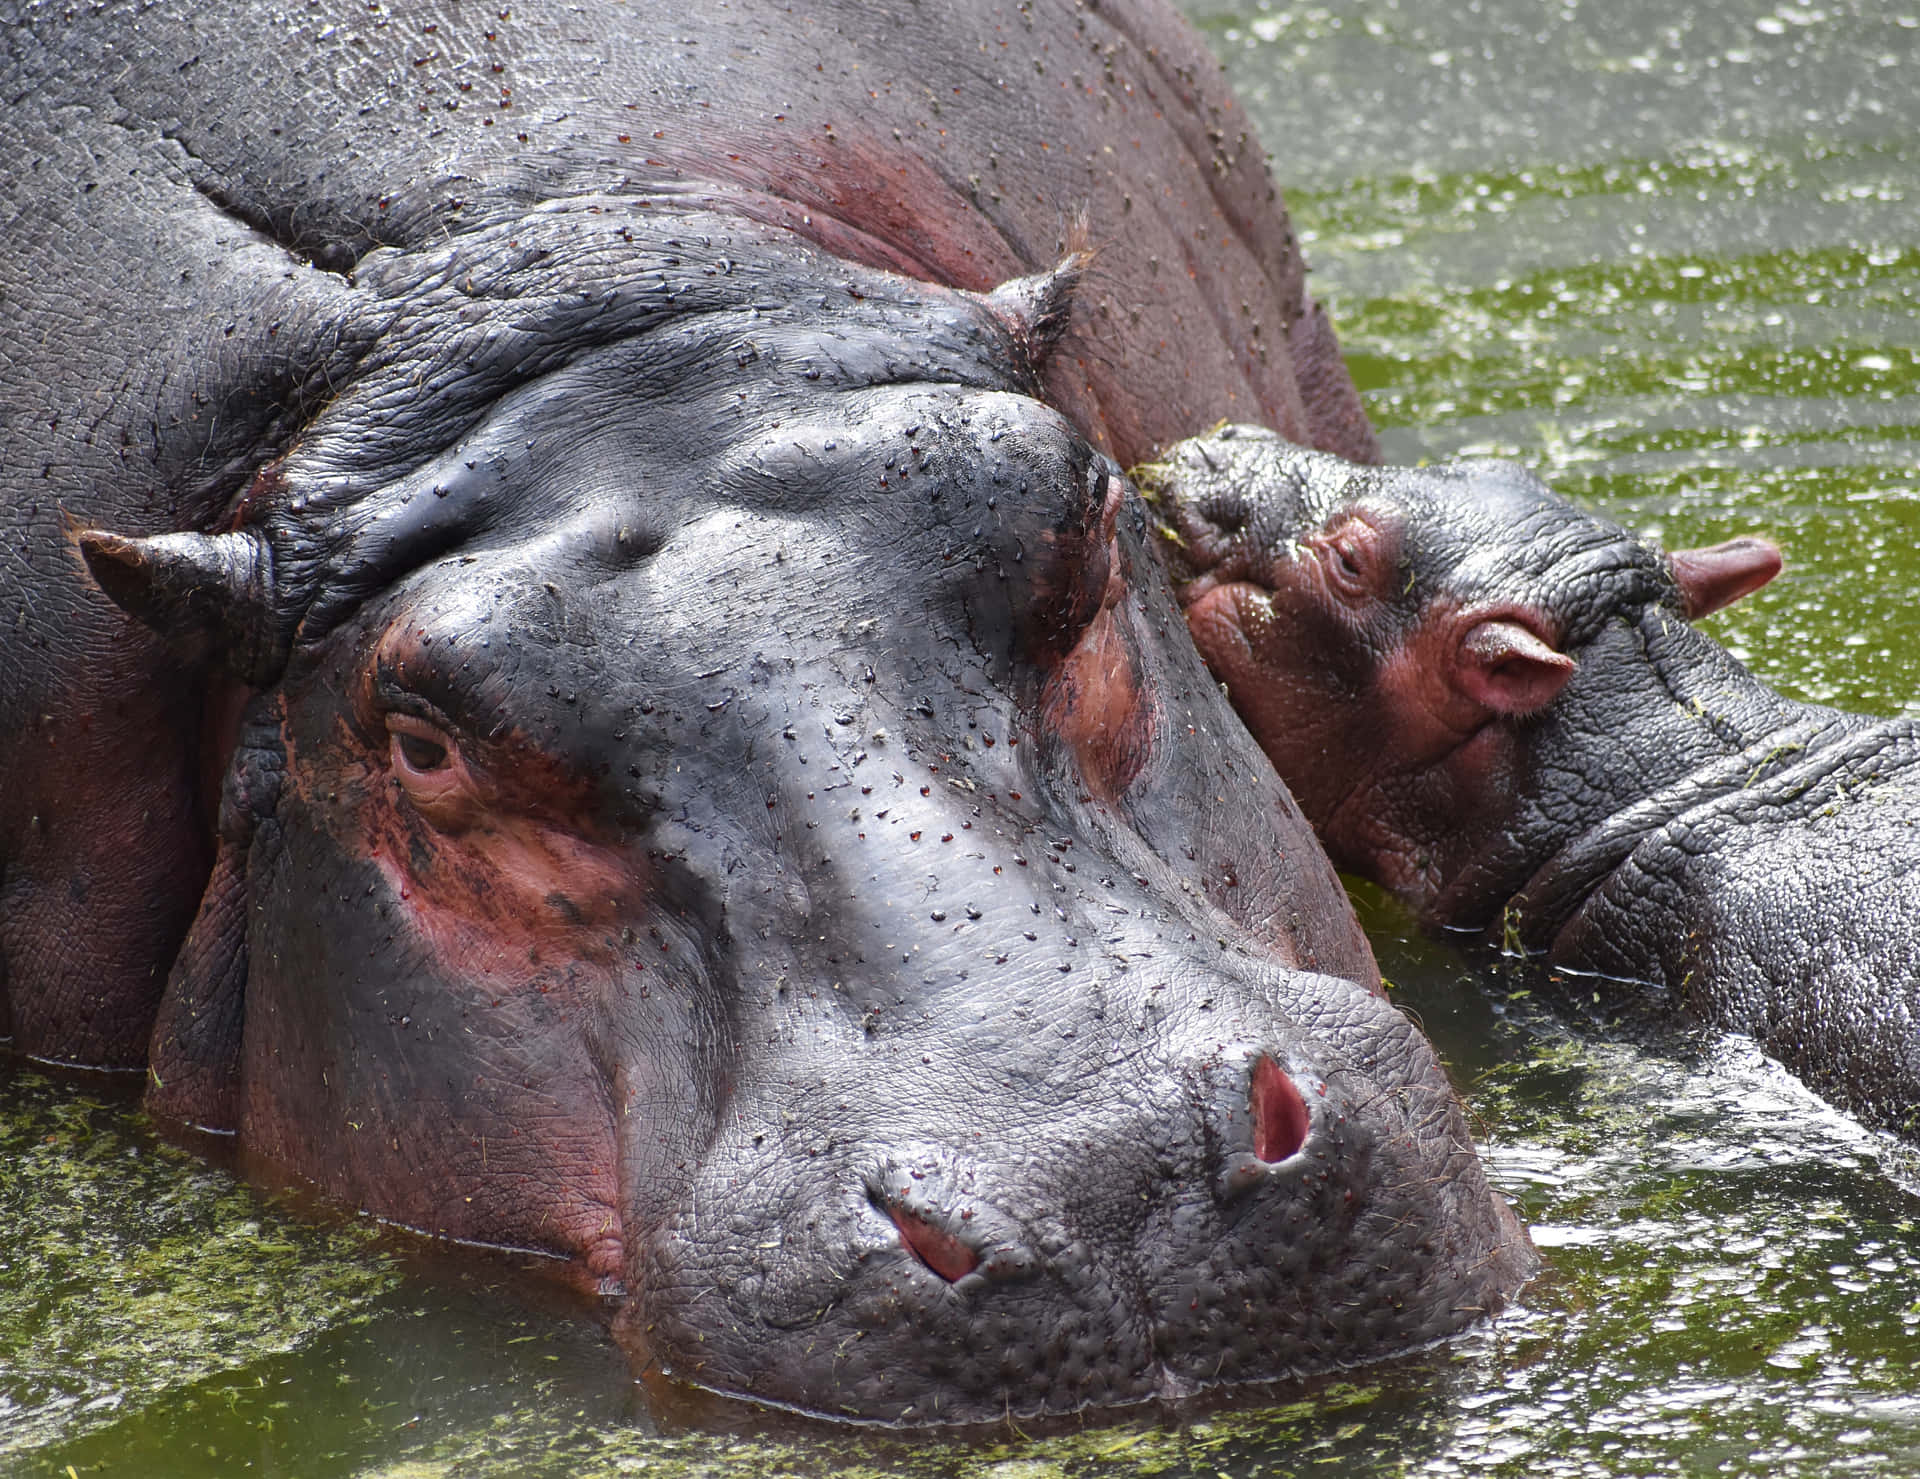 Big Baby River Hippopotamus Picture